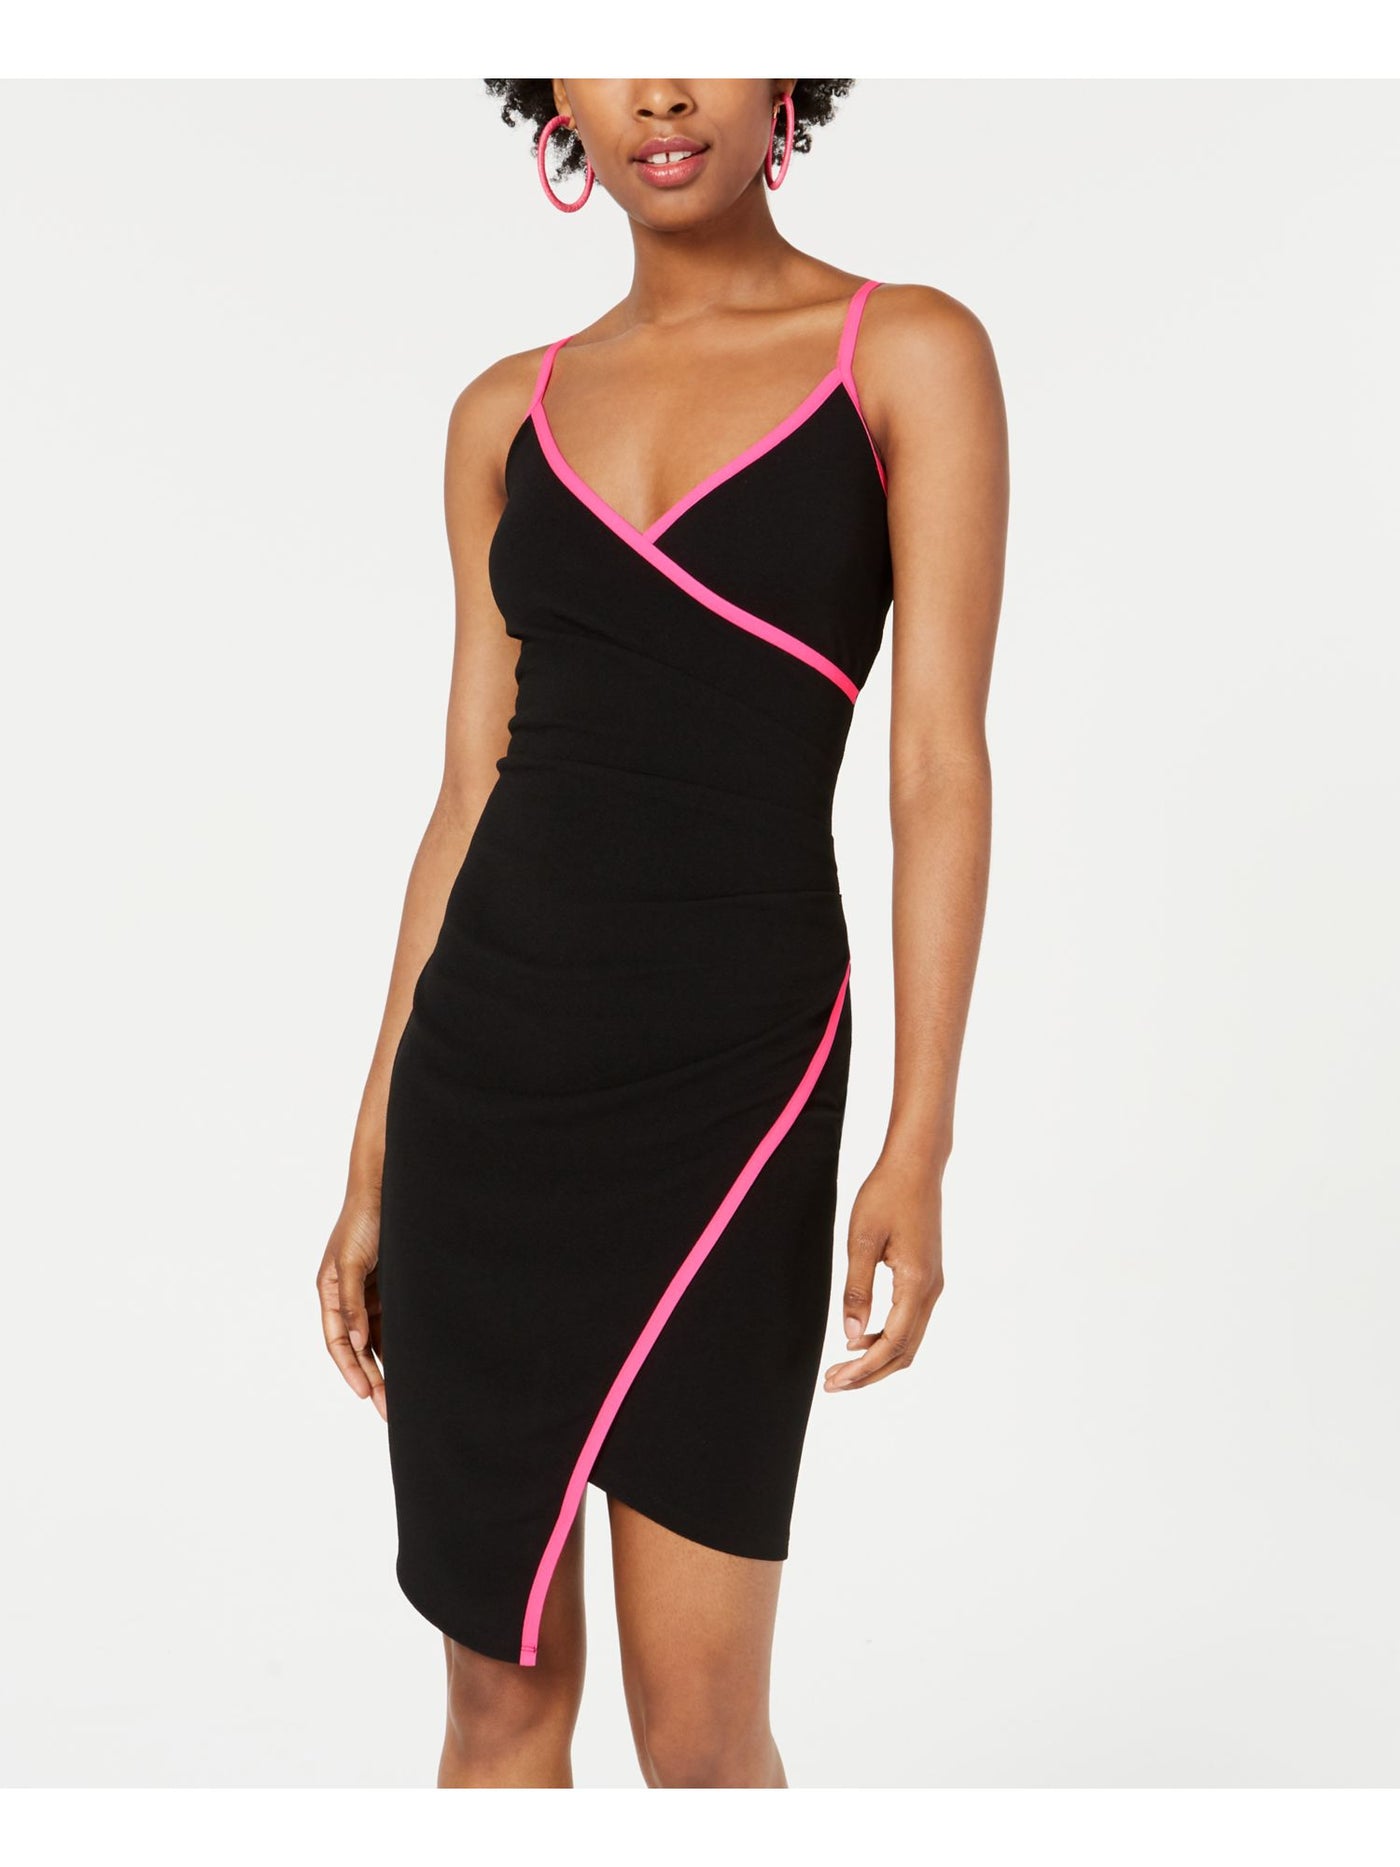 CRAVE FAME Womens Black Spaghetti Strap Short Body Con Evening Dress Juniors XS